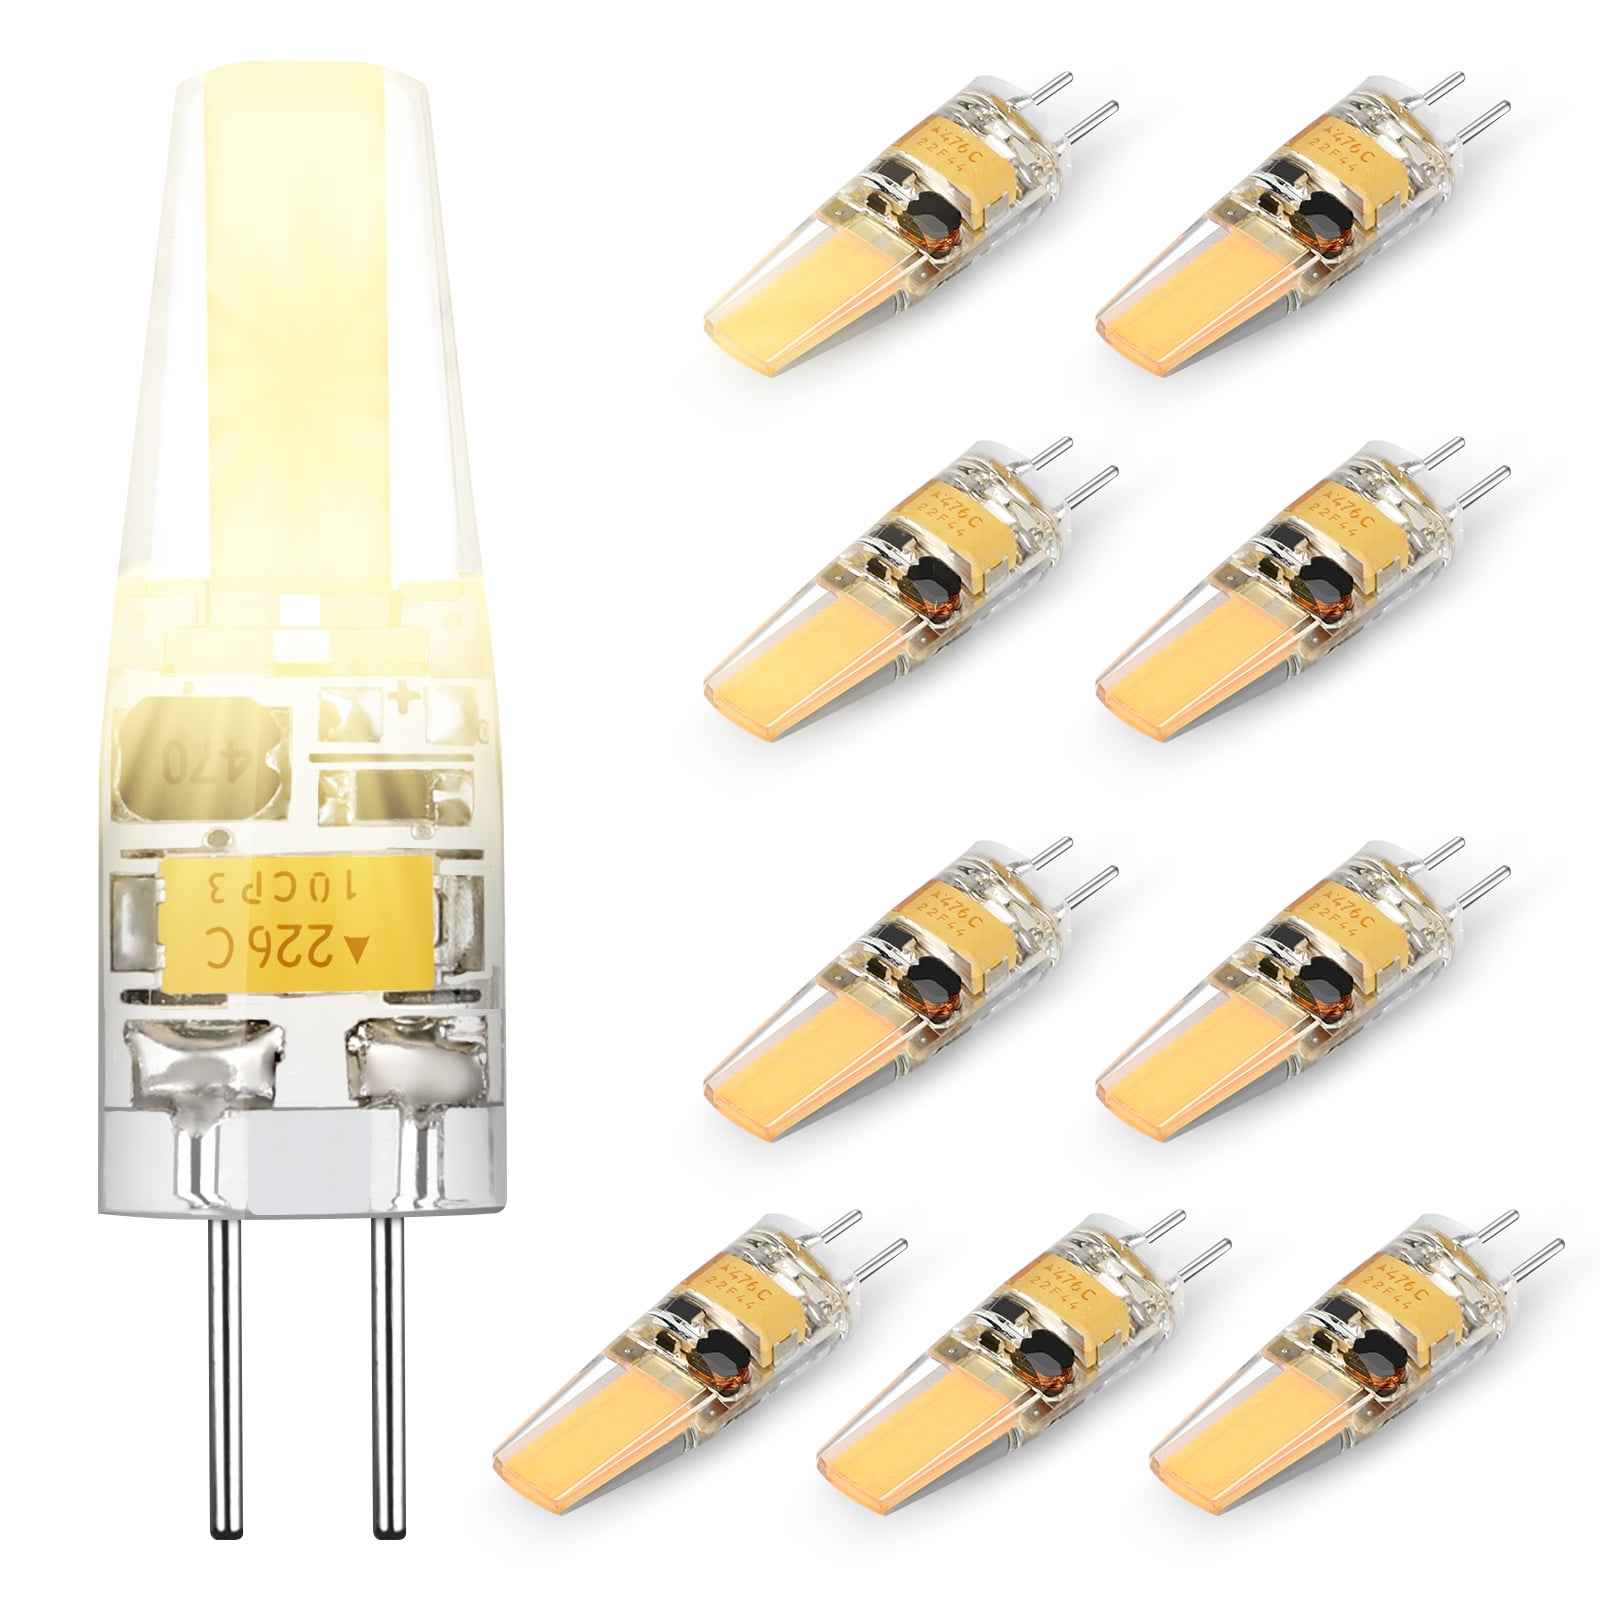 EEEkit 10pcs G4 LED Light Bulbs 3000K Warm White Lighting 2W Equivalent to AC DC 12V Halogen Bulb, Bi-pin LED Bulb Silicone G4 LED Bulbs for Under Cabinet Puck Light, Chandelier,